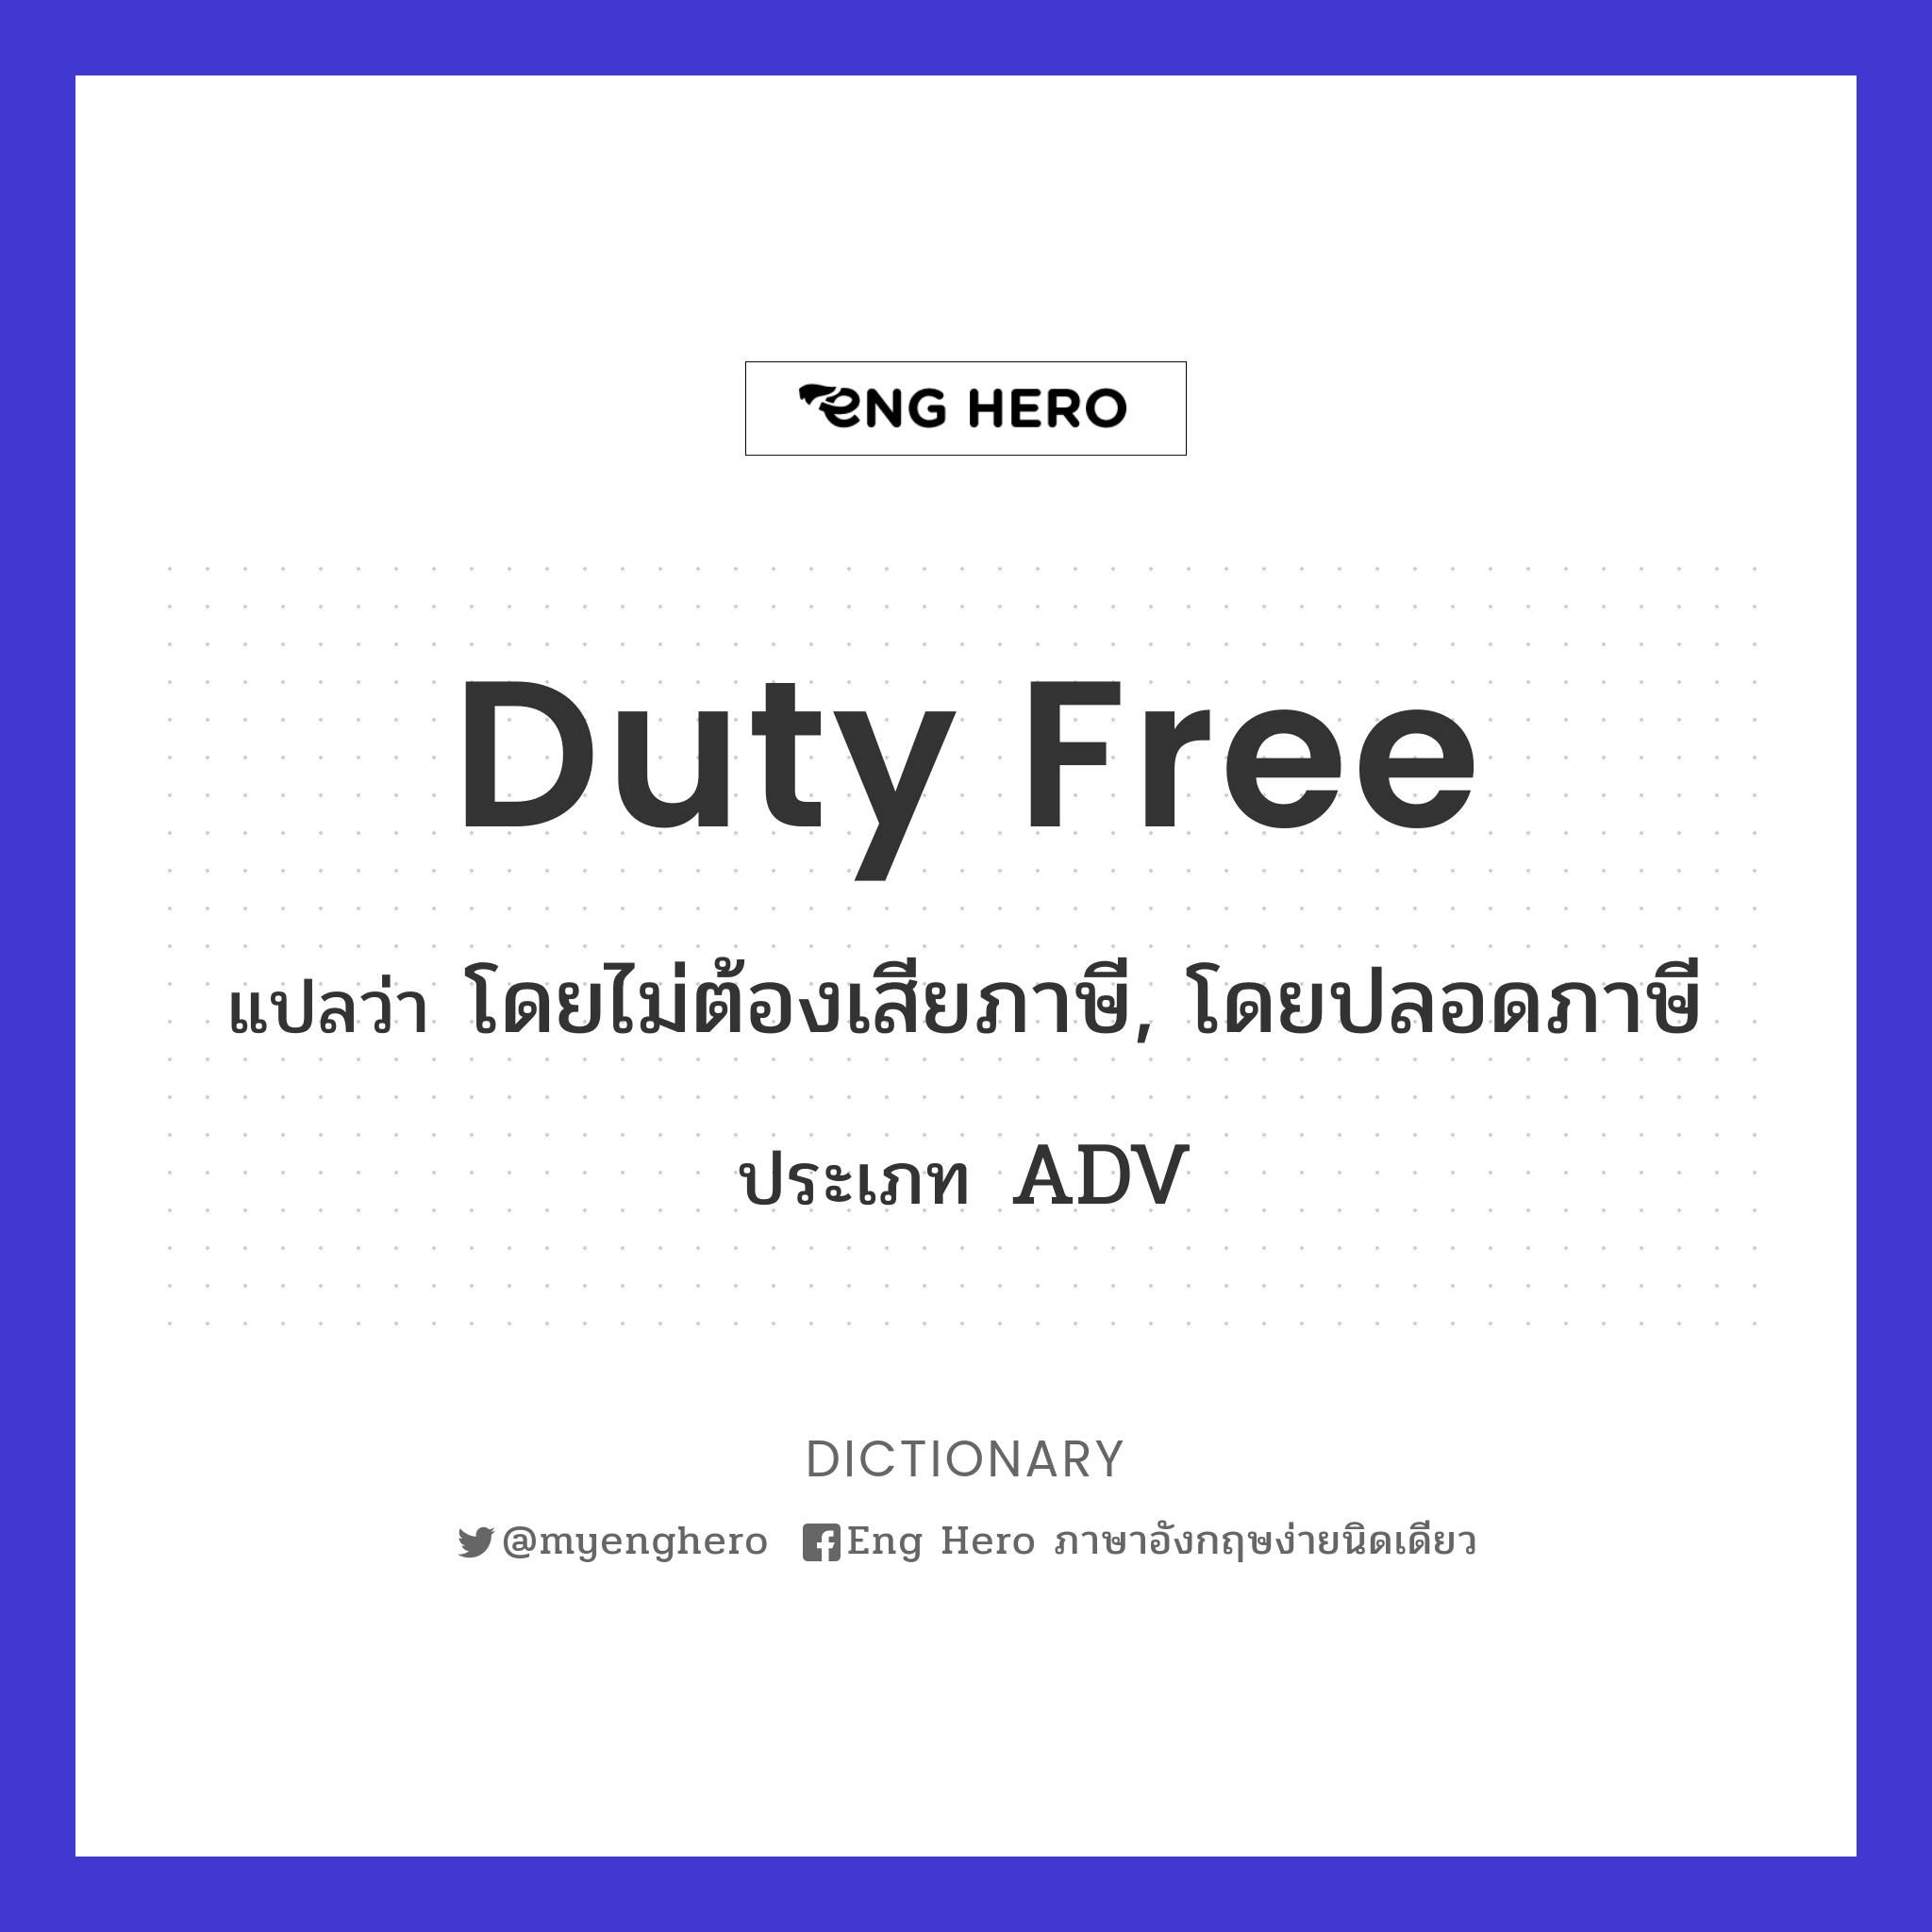 duty free